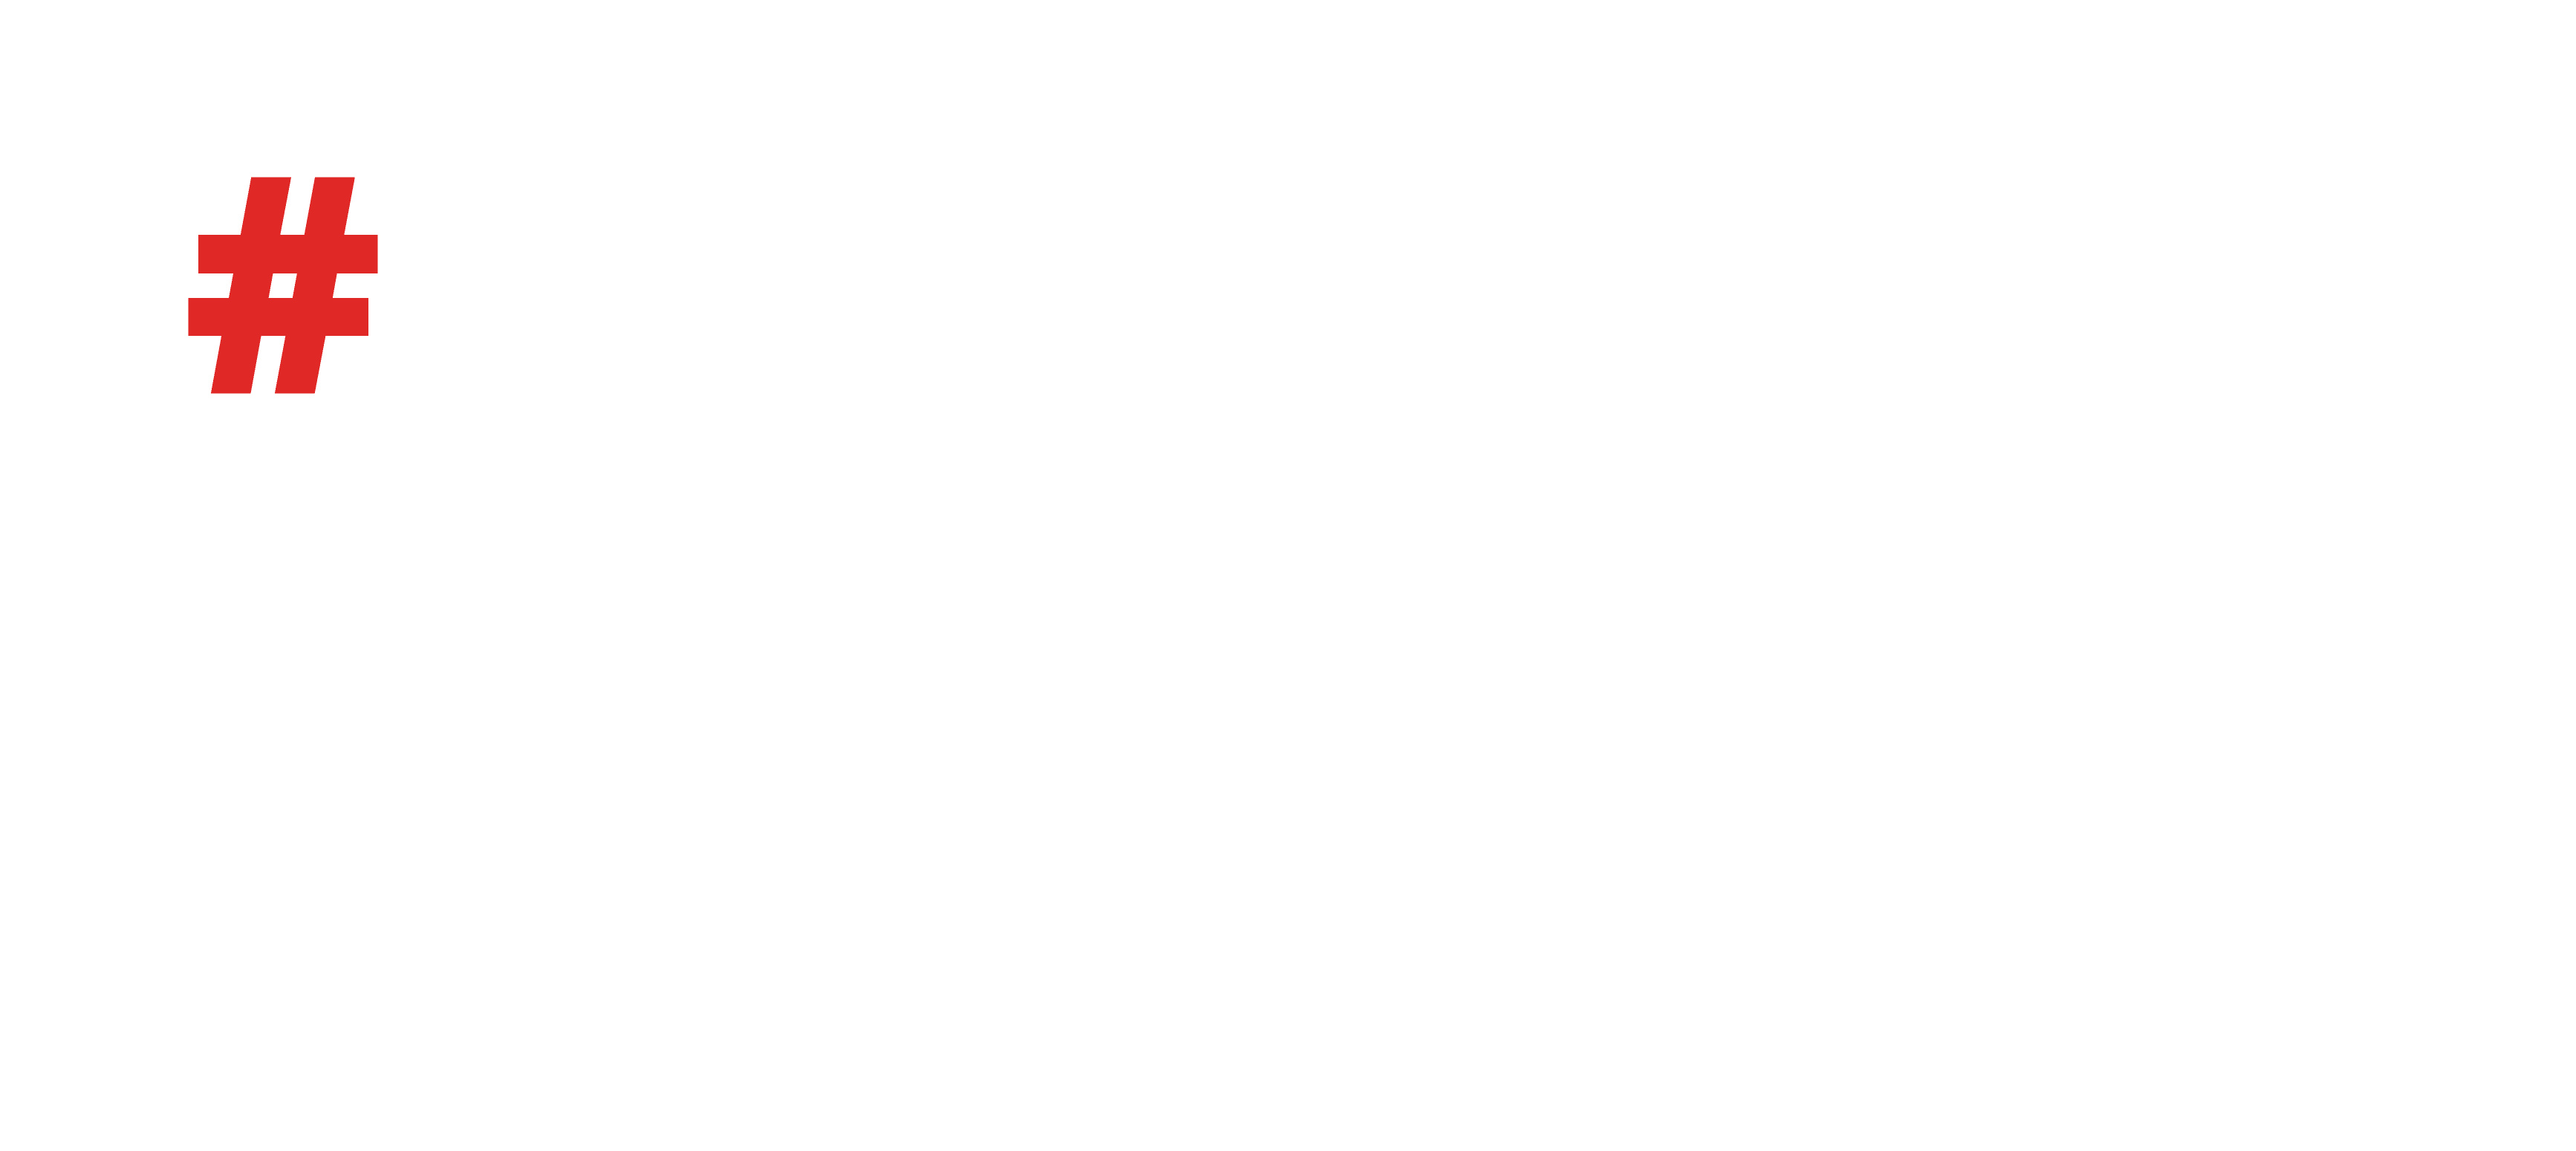 TourismRocks-ReverseWhite-TransparentLettering